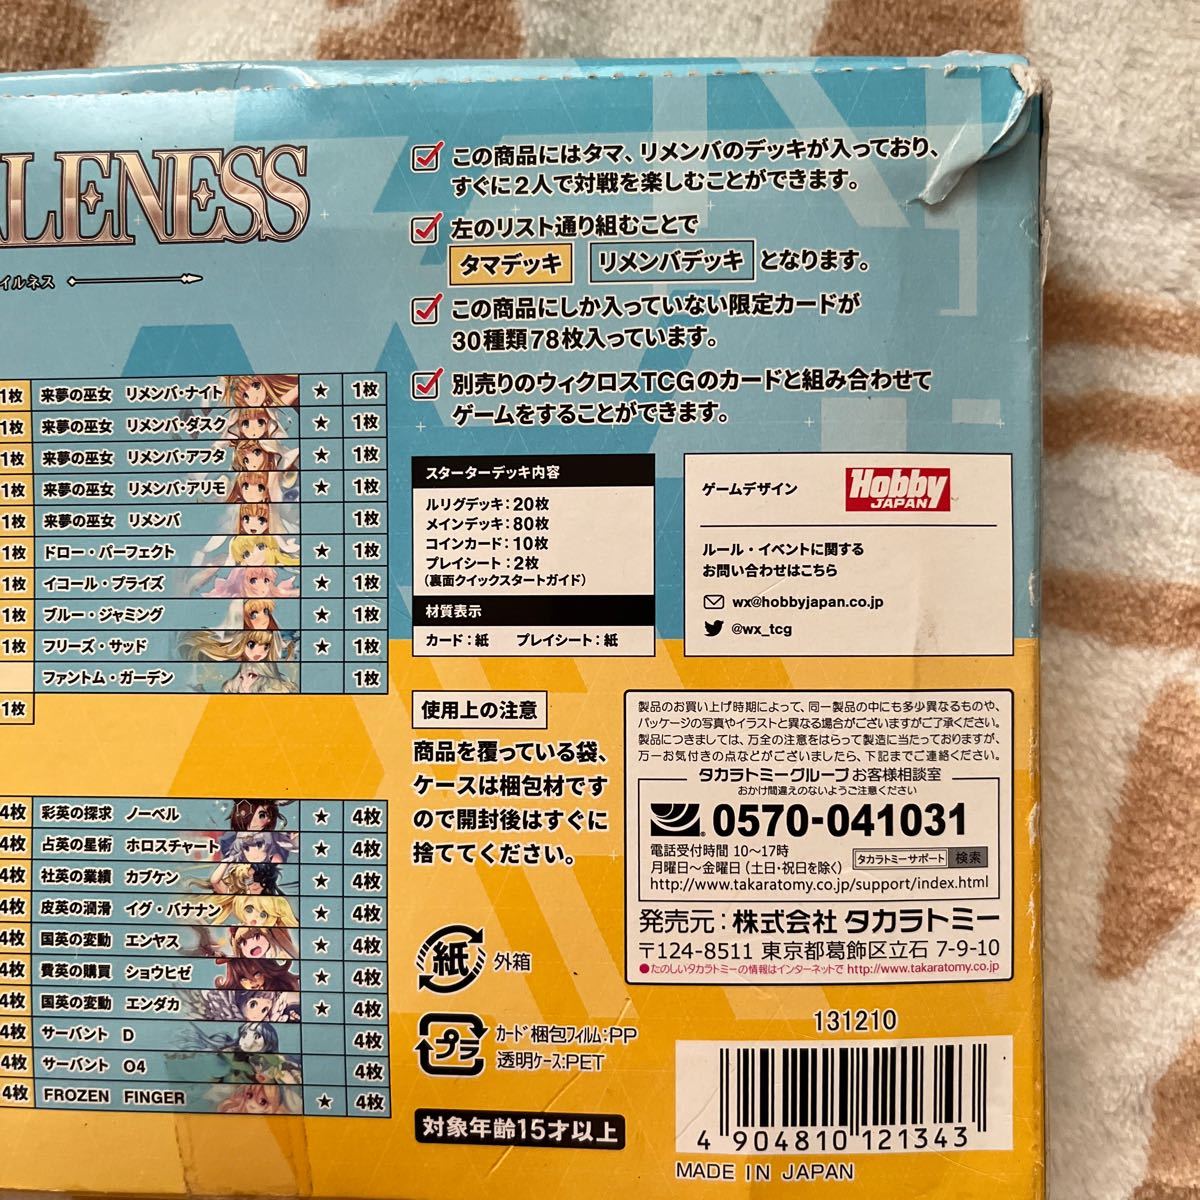  Takara Tommy wi Cross двойной pe il nes новый товар не использовался товар letter pack почтовый сервис плюс 520 иен 